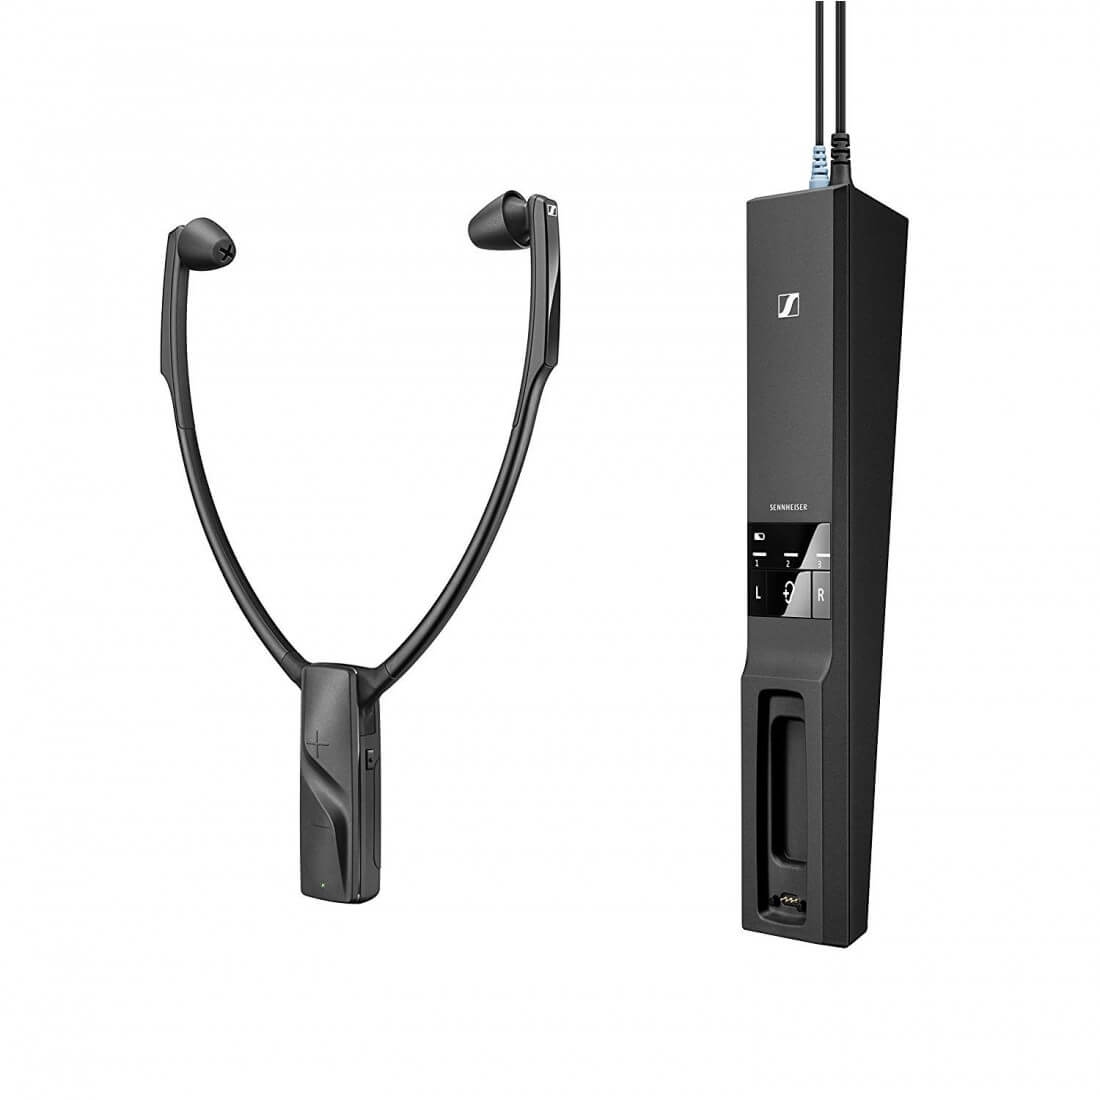 Gli auricolari wireless per TV Sennheiser RS5000